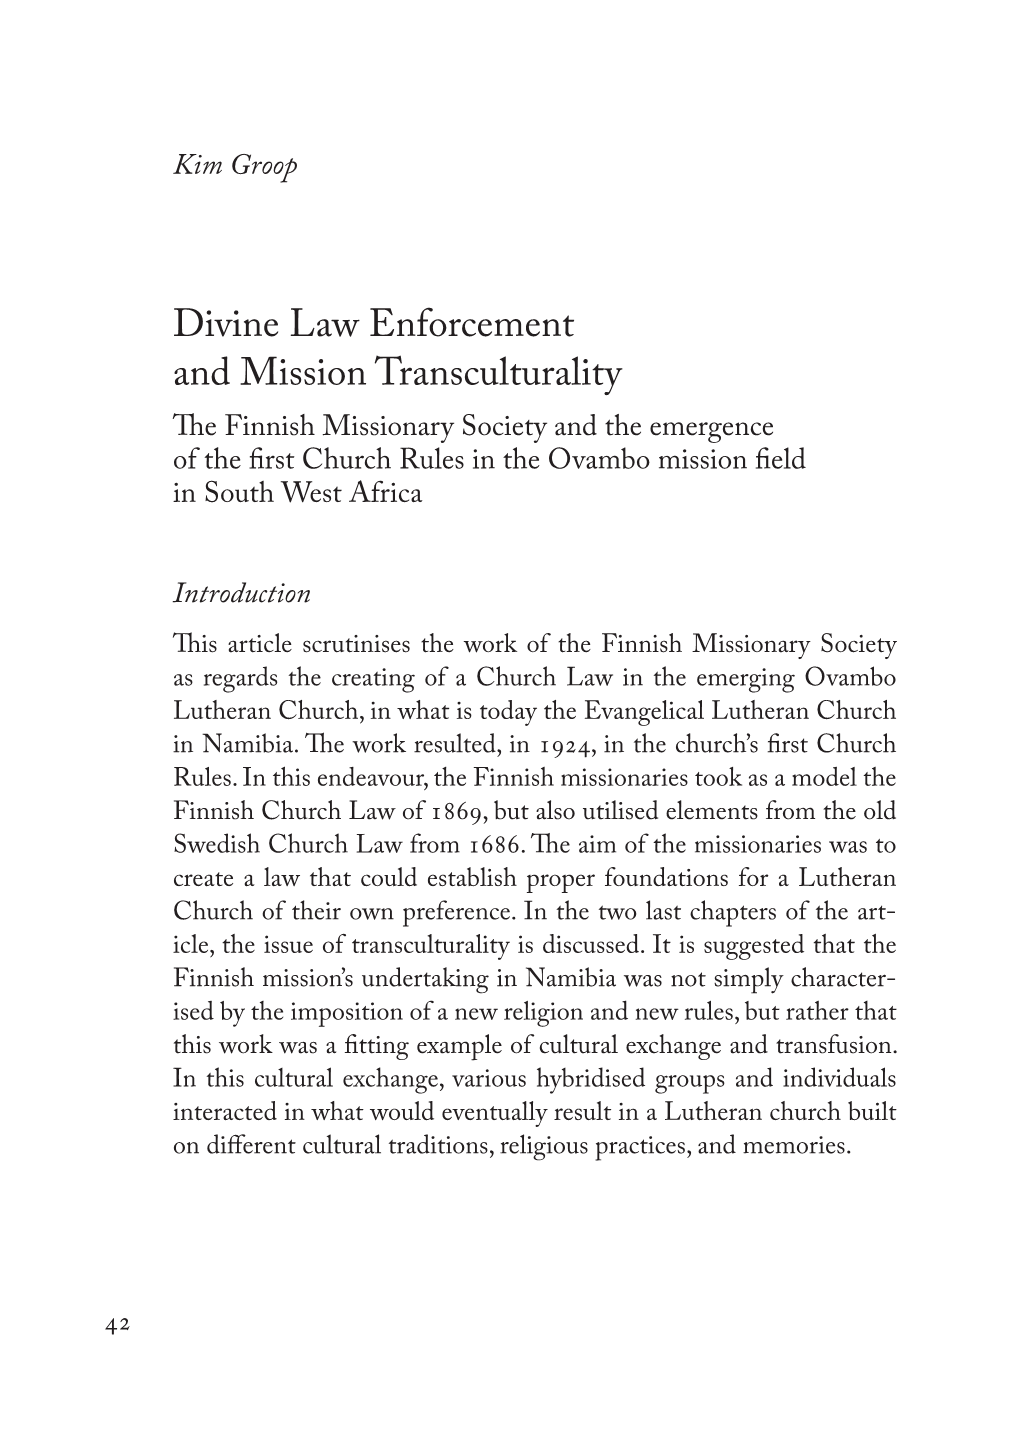 Divine Law Enforcement and Mission Transculturality